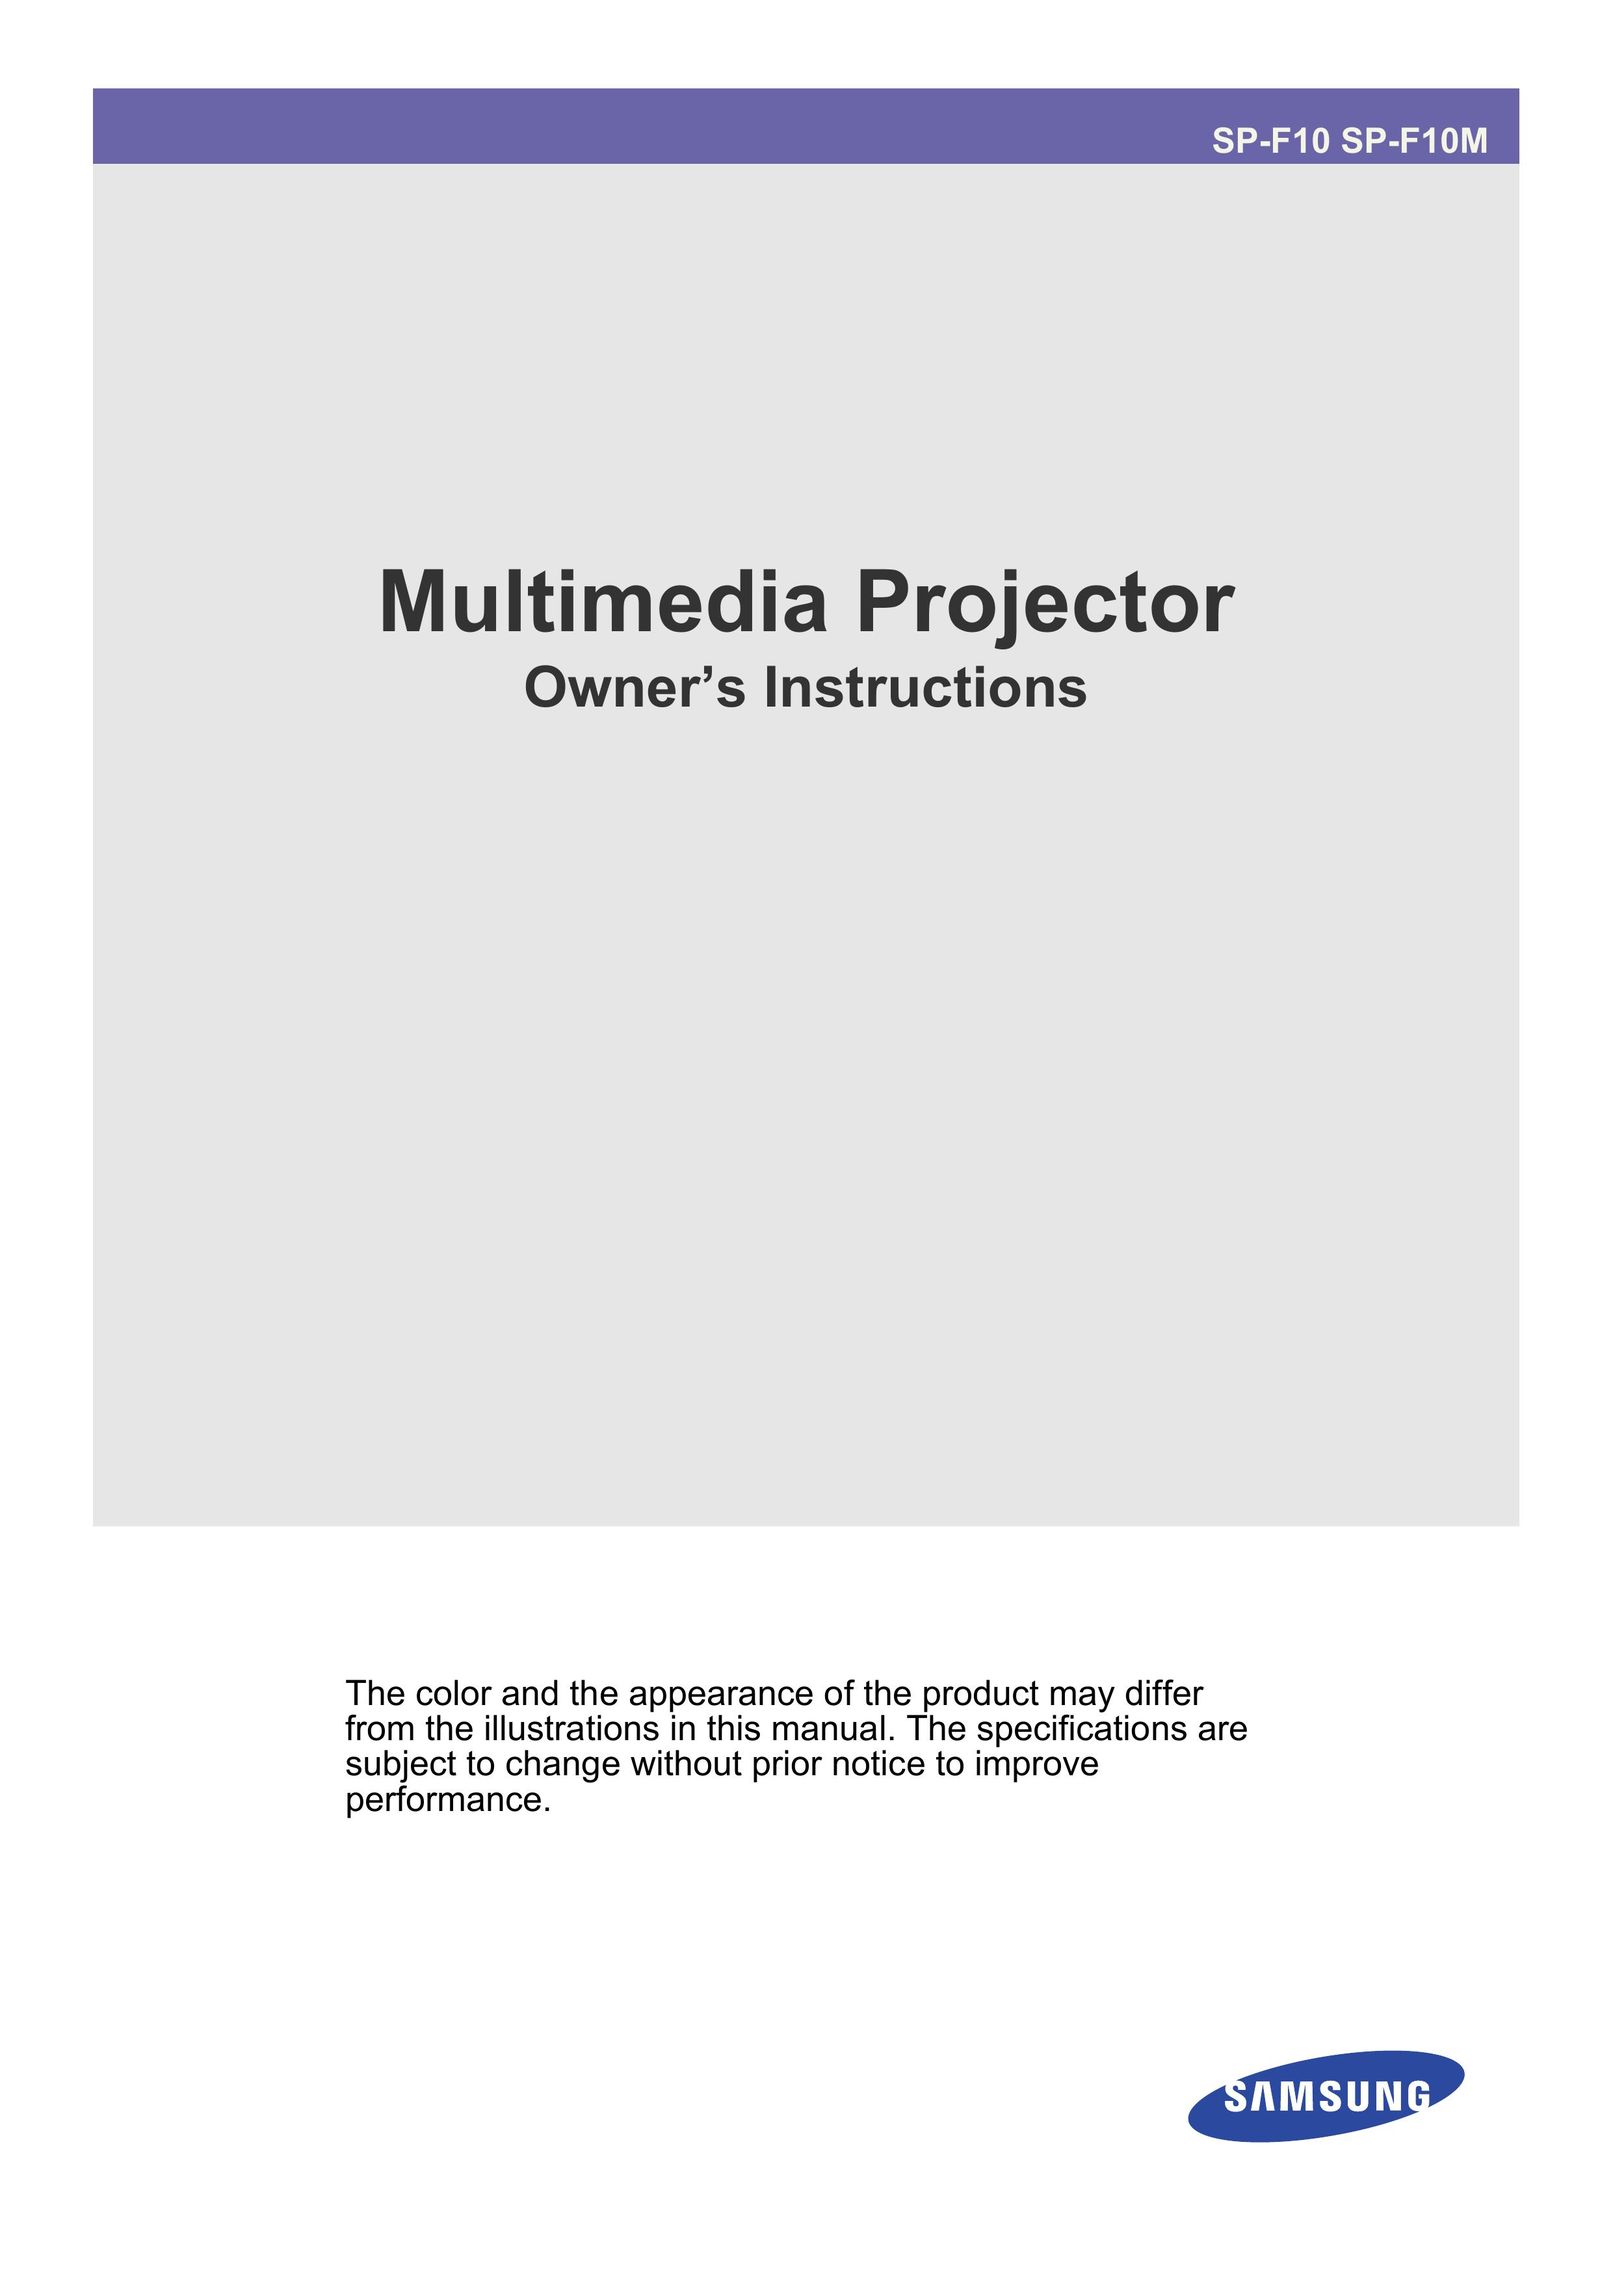 Samsung SP-F10M Projector User Manual